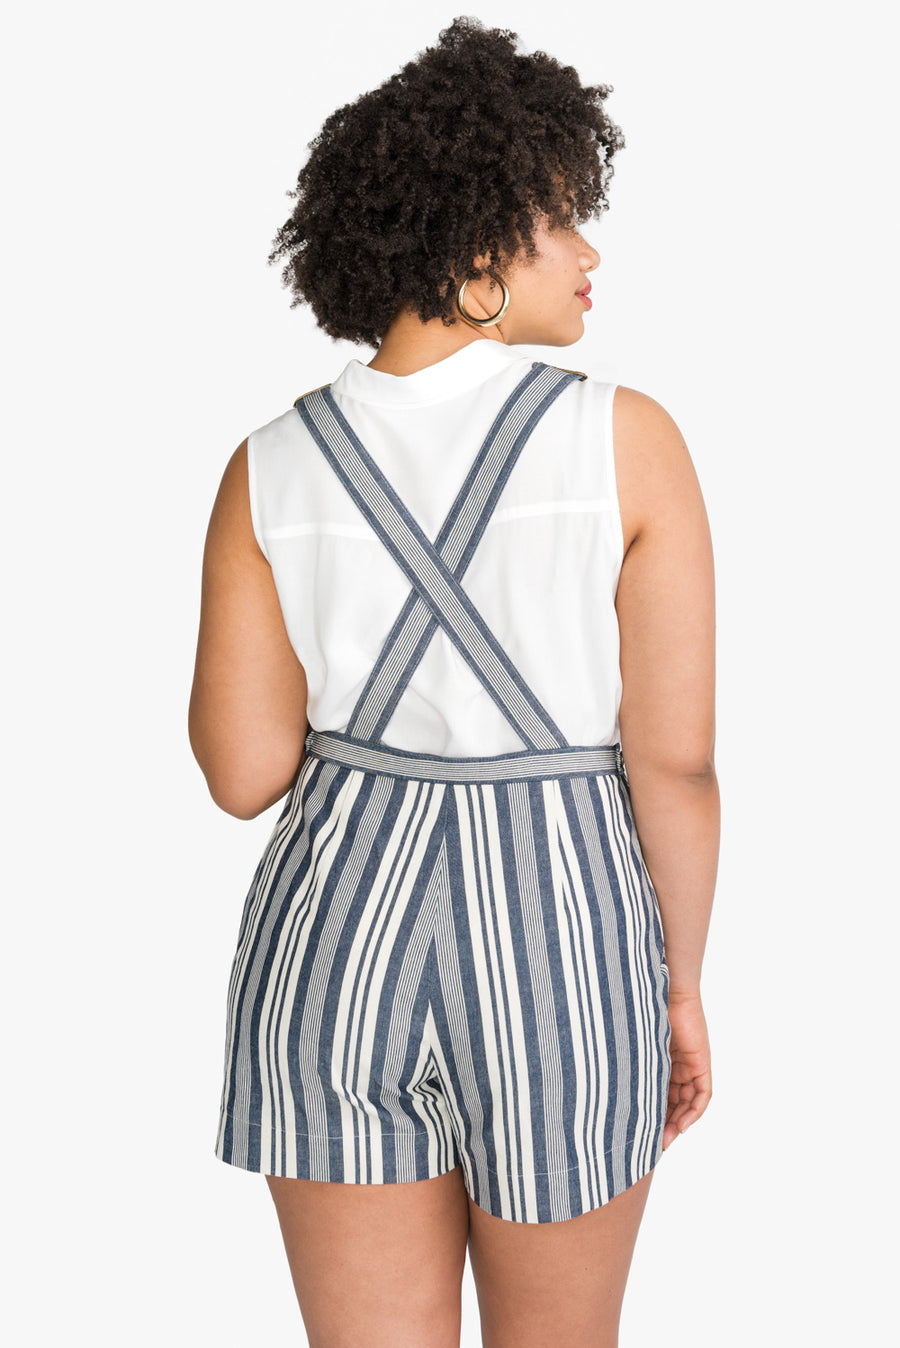 Jenny Overall Shorts Pattern | Dungaree shorts pattern // from Closet Core Patterns